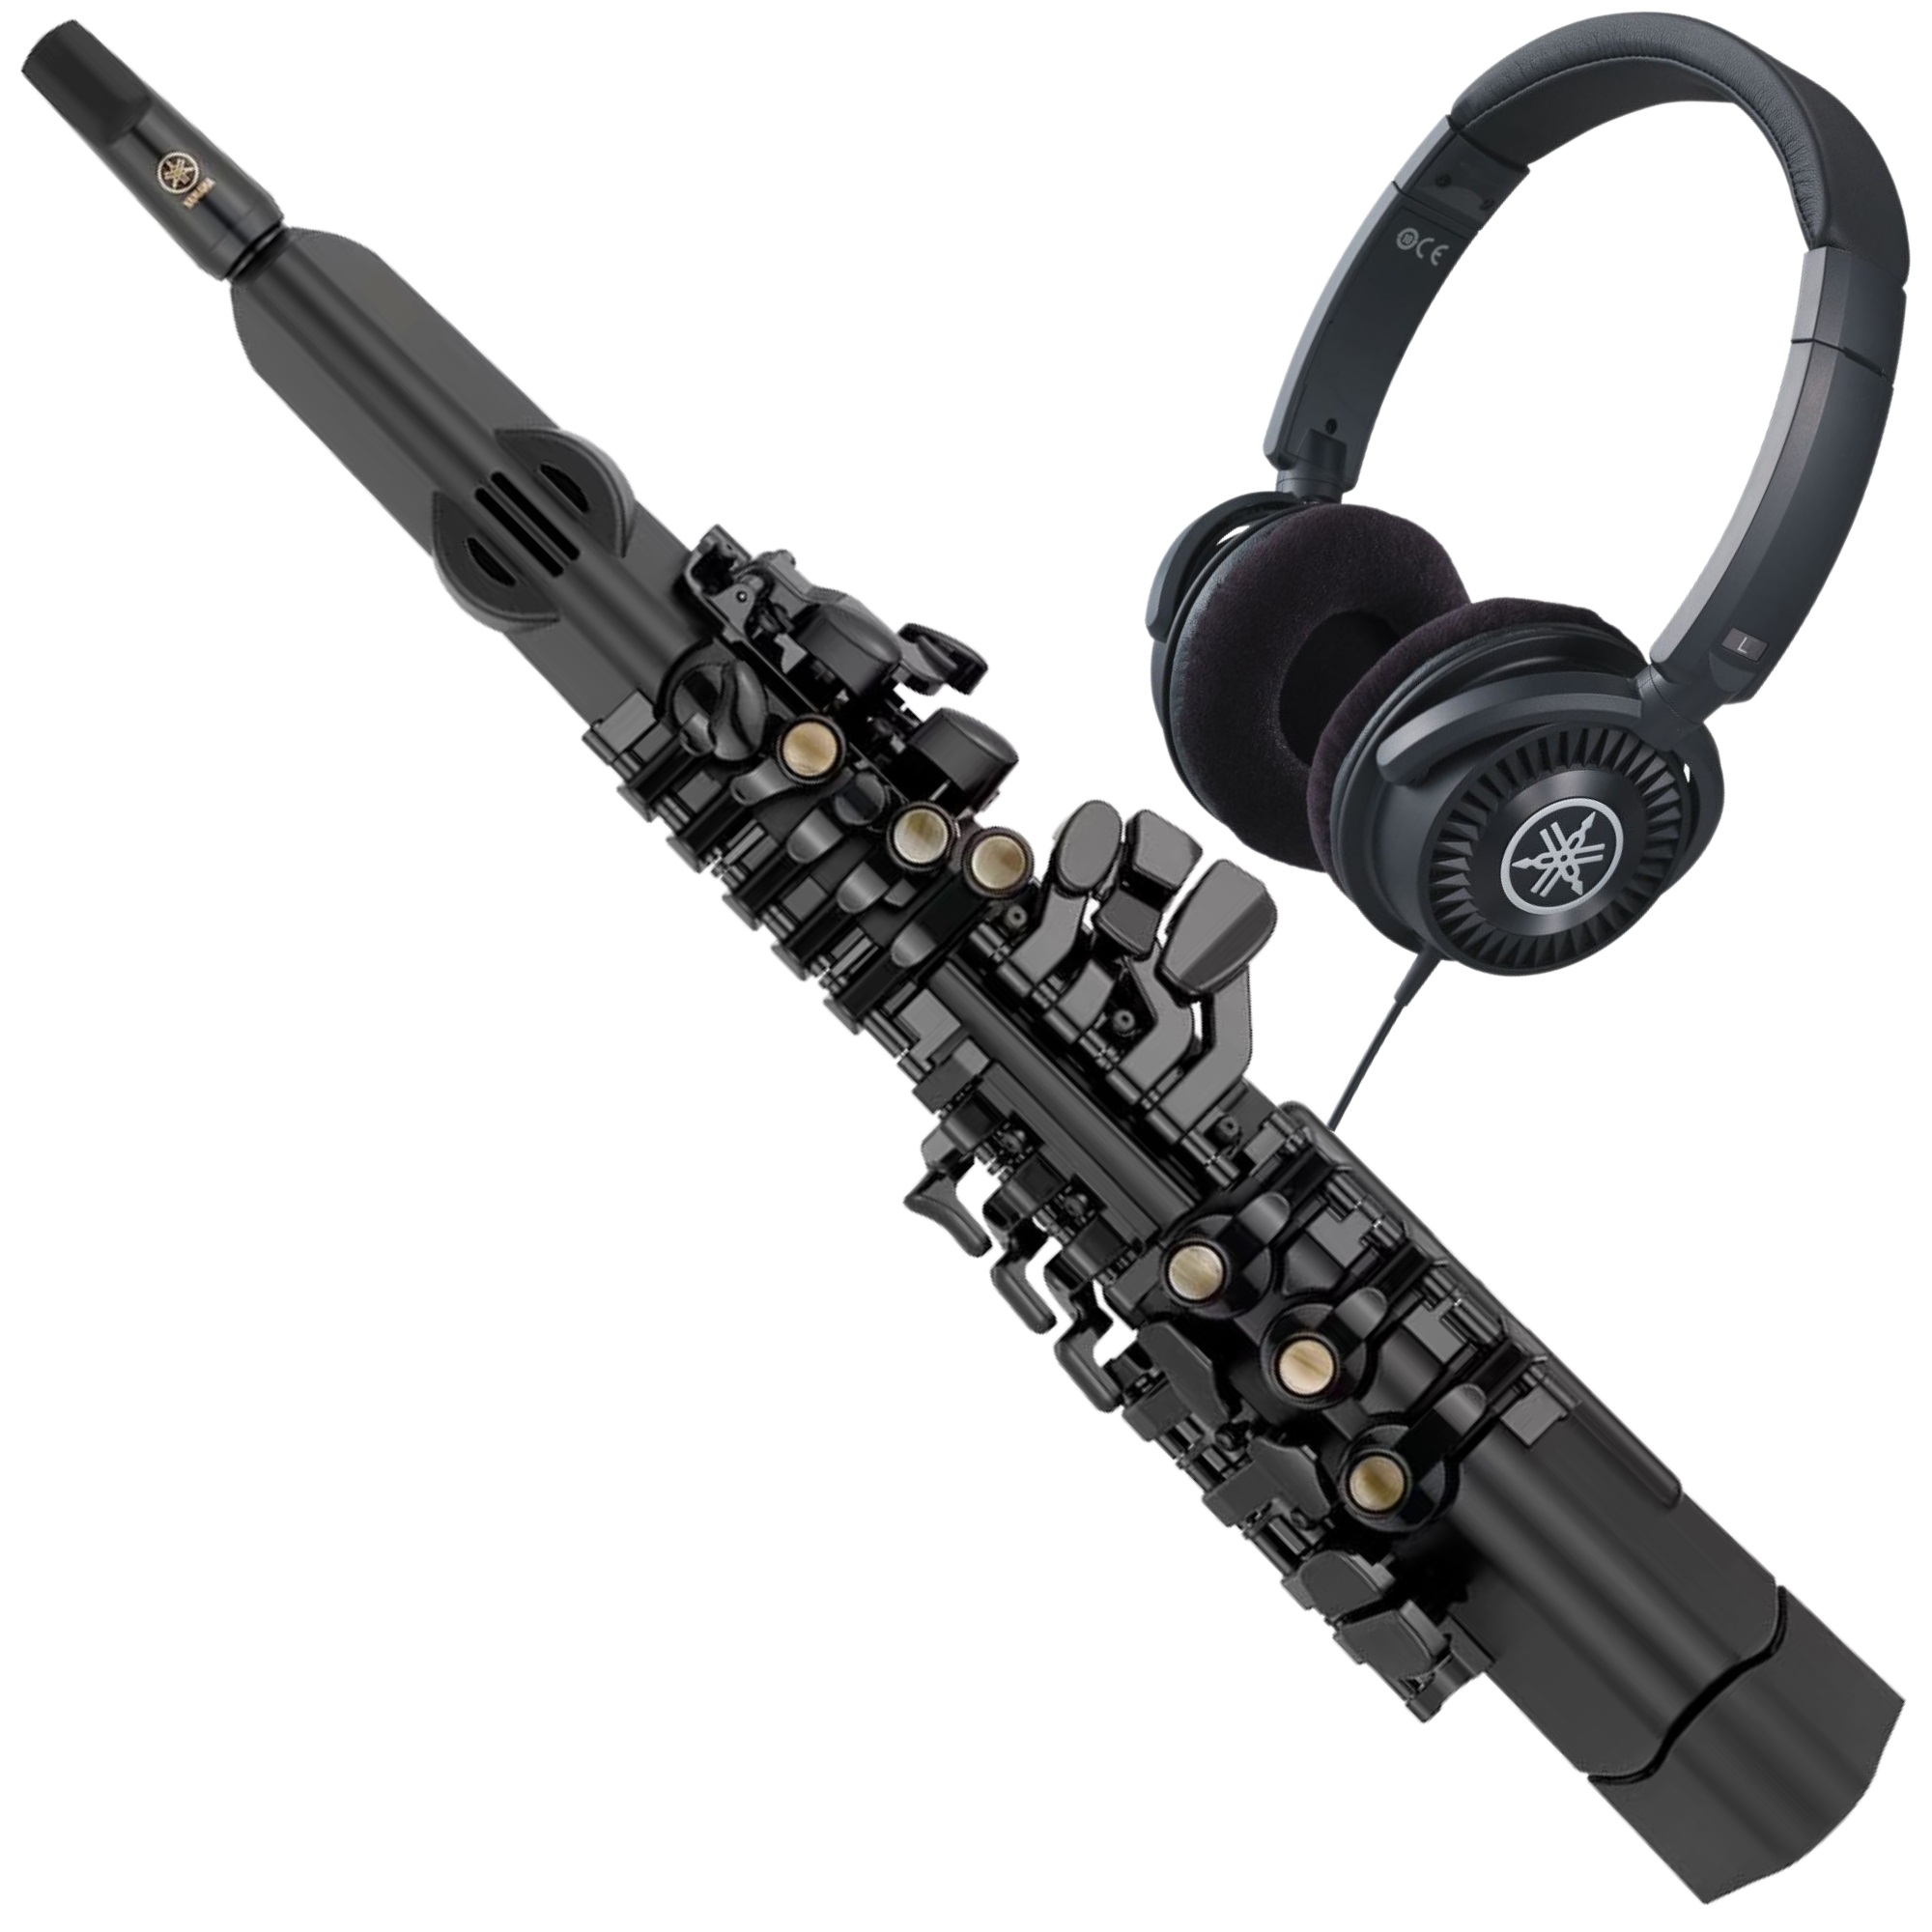 Yamaha YDS-120 Digital Saxophone and HPH150 Headphones bundle